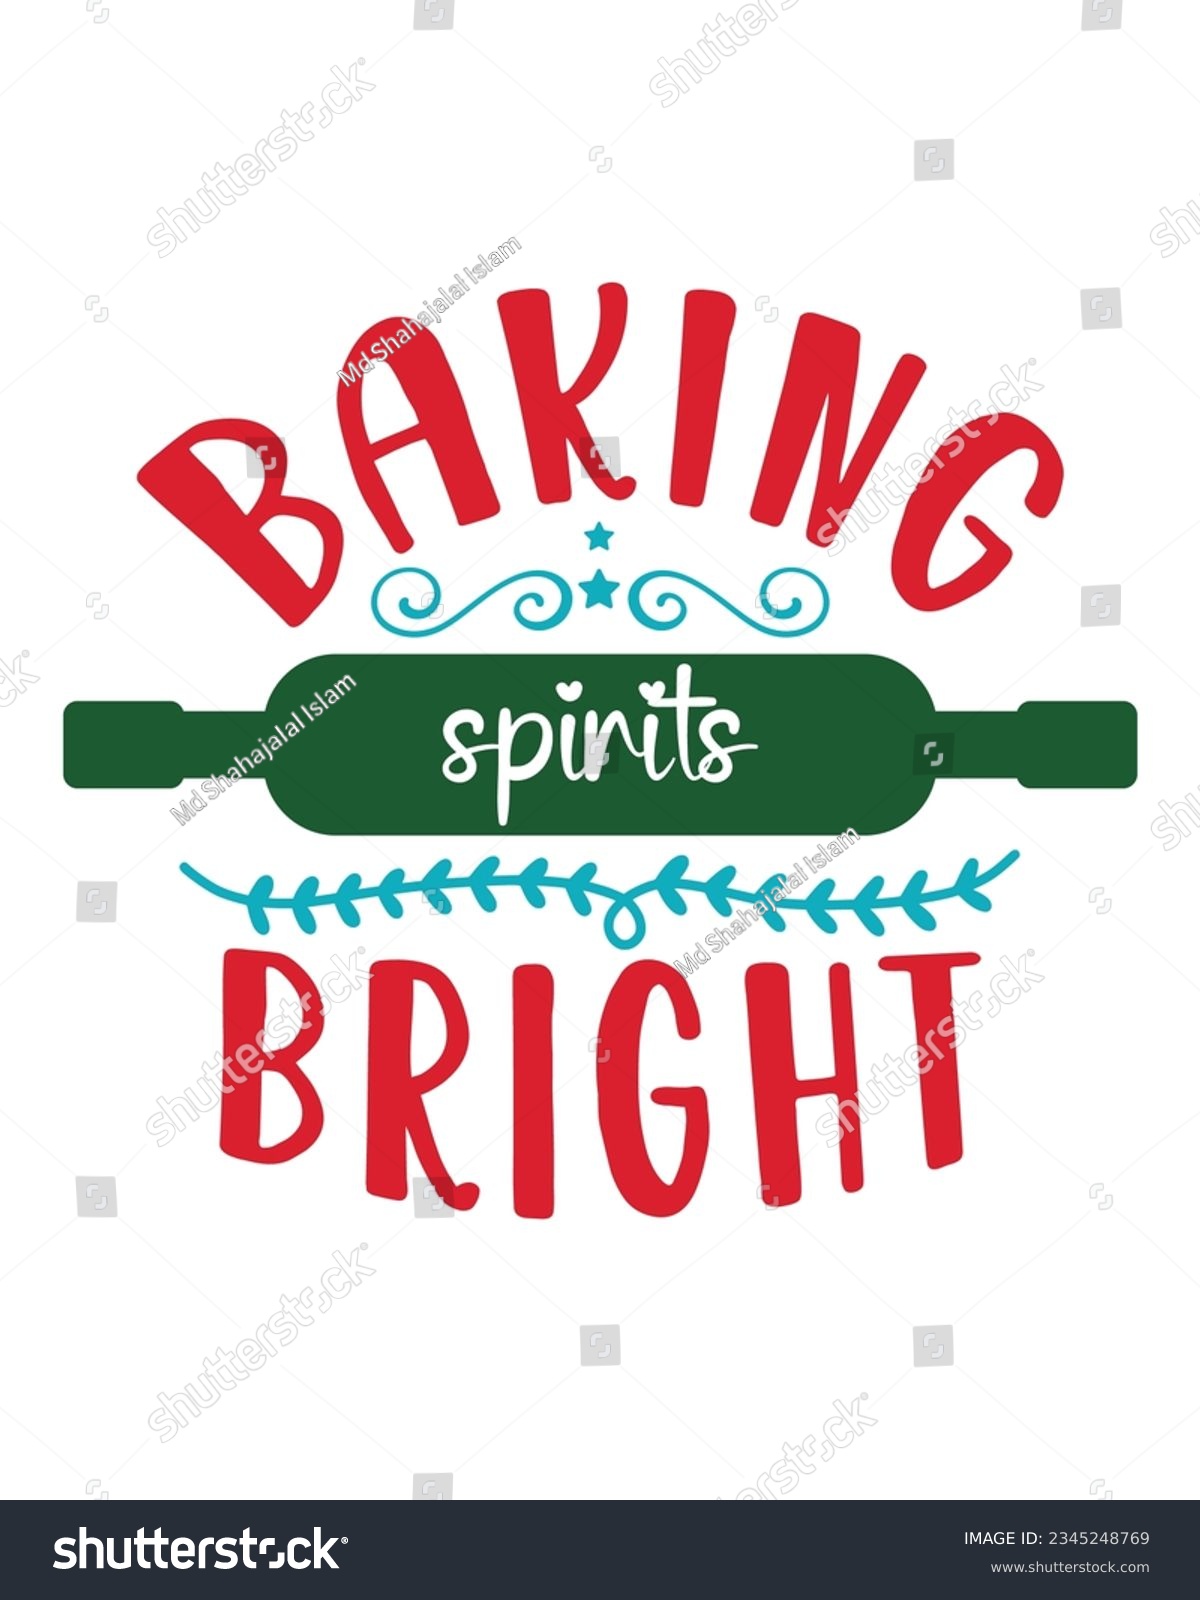 SVG of Baking spirits bright, Christmas SVG, Funny Christmas Quotes, Winter SVG, Merry Christmas, Santa SVG, t shirts design, typography, vintage, Holiday shirt svg